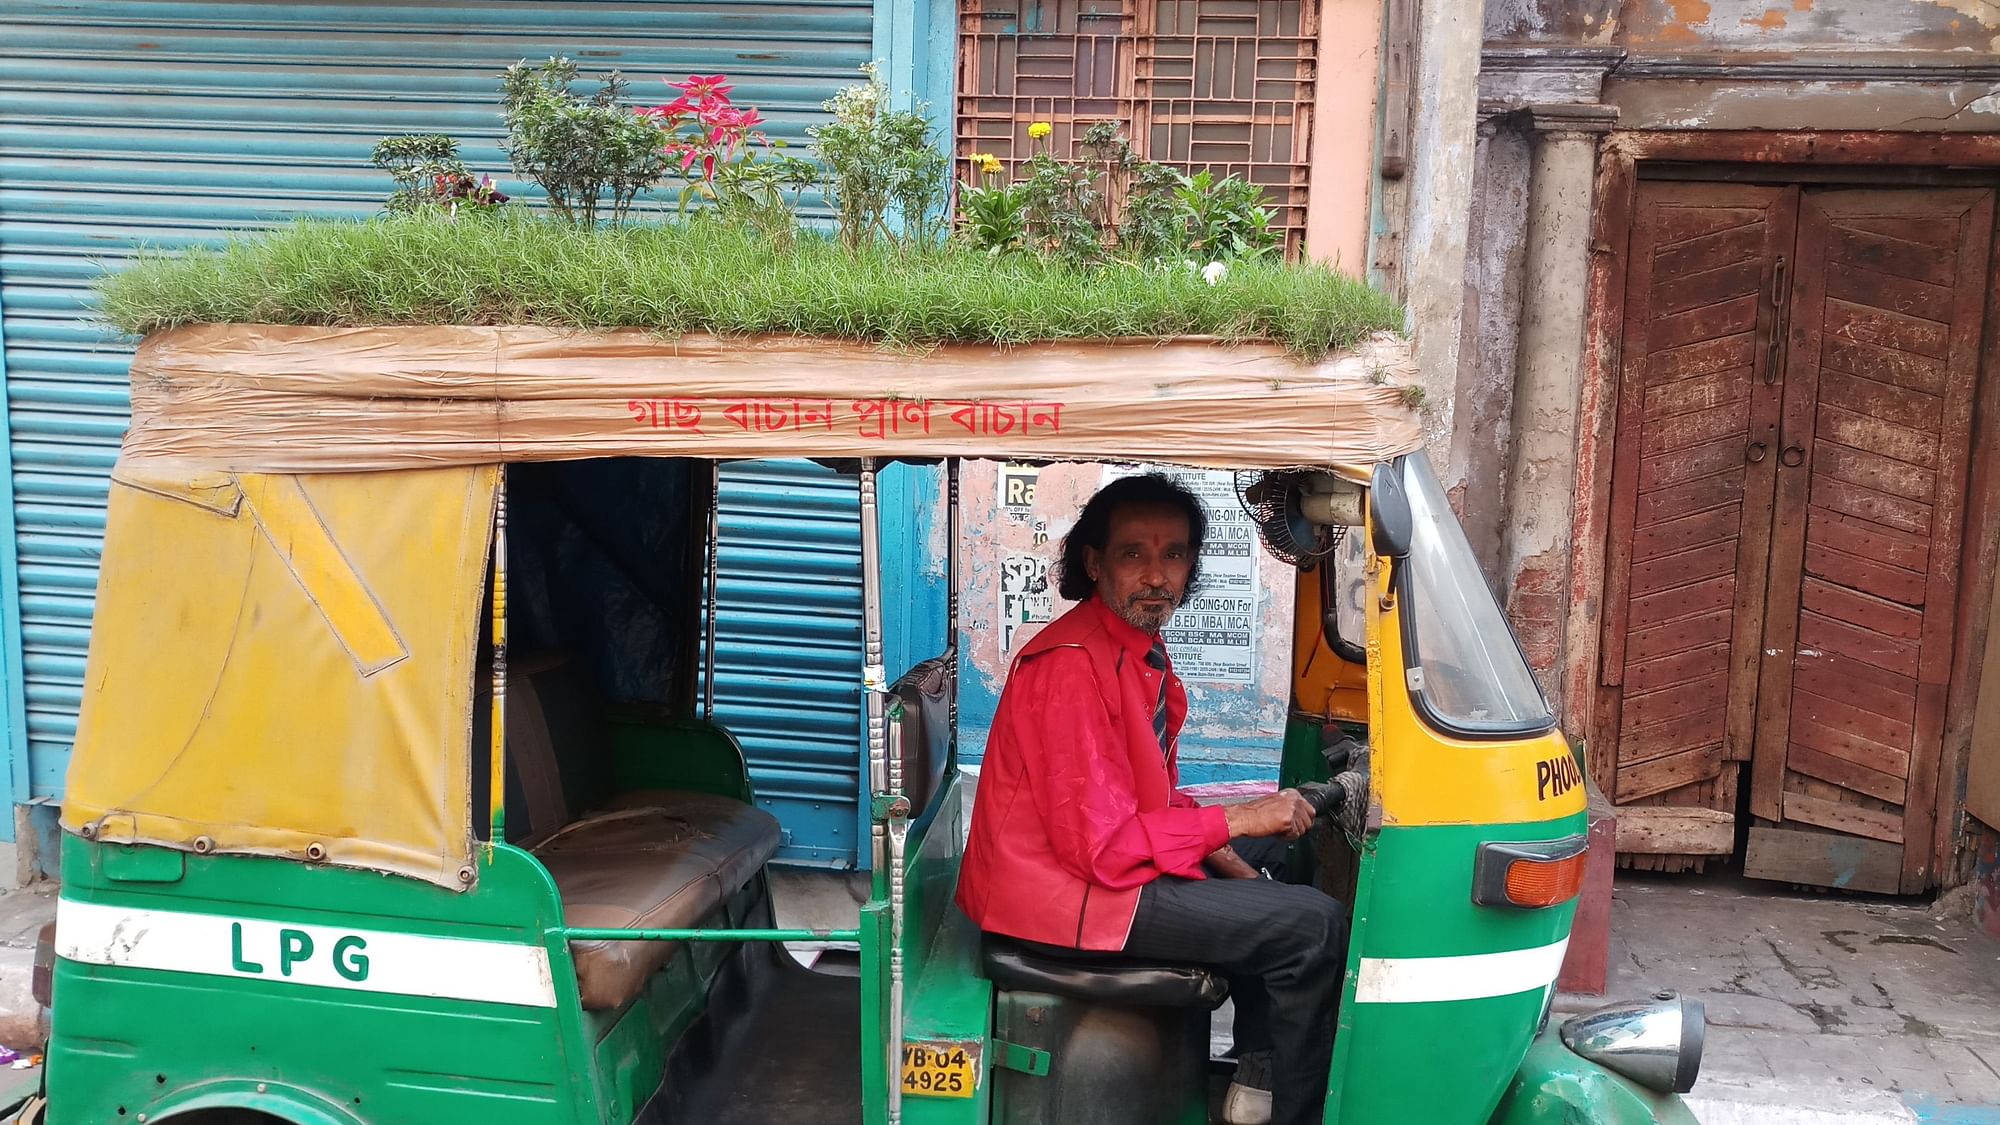 An Auto Rickshaw With a Rooftop Garden.